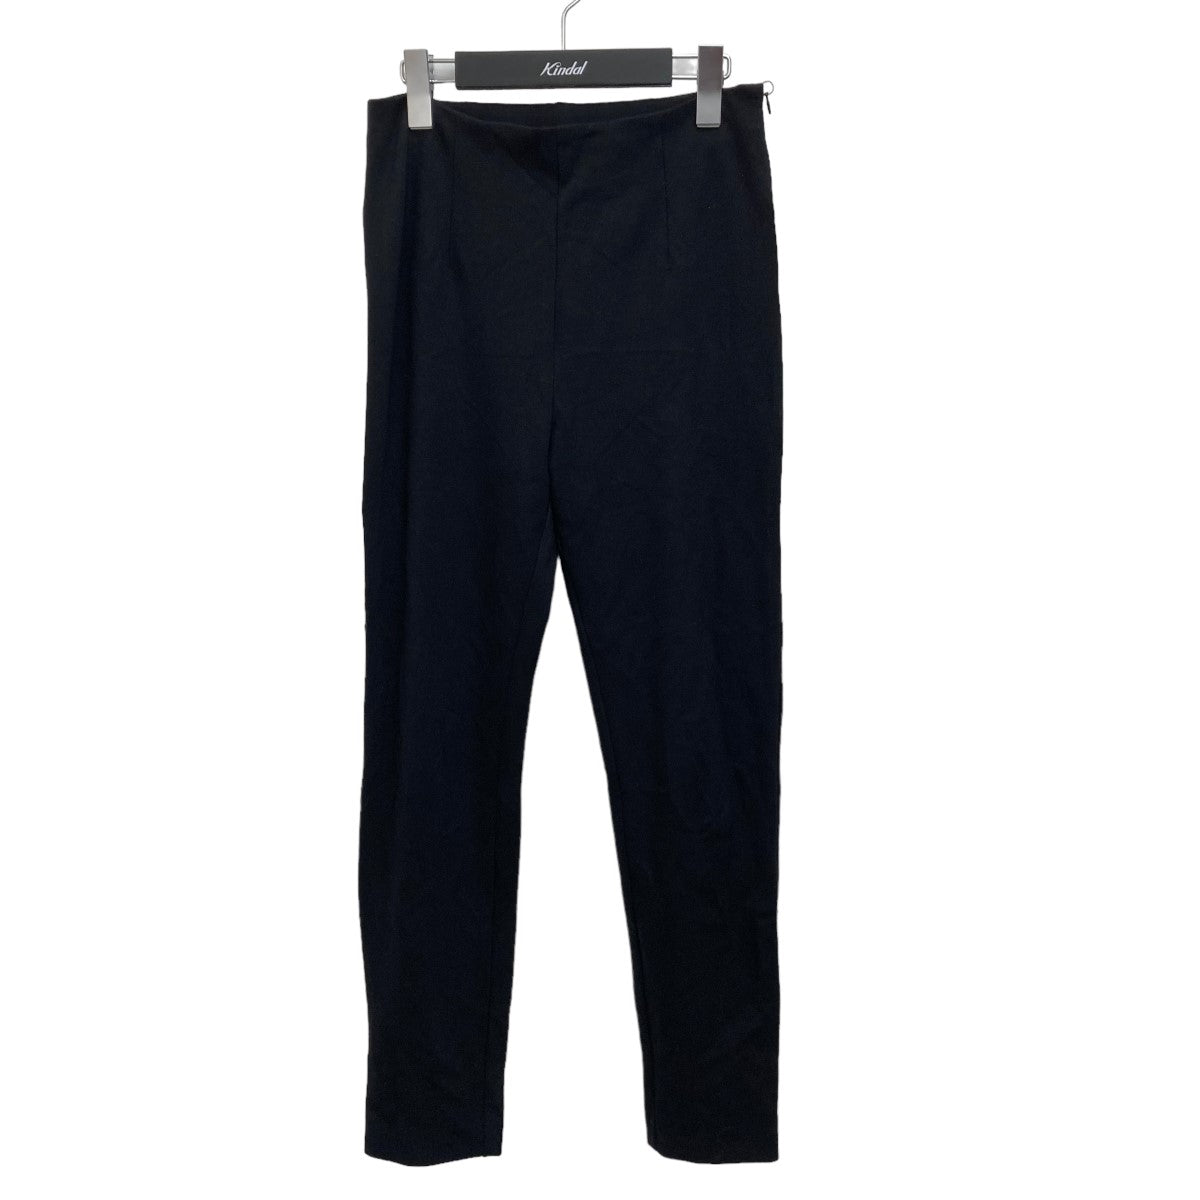 yo BIOTOP(ビオトープ) Tiny Pants パンツ EES-41020-C ブラック 